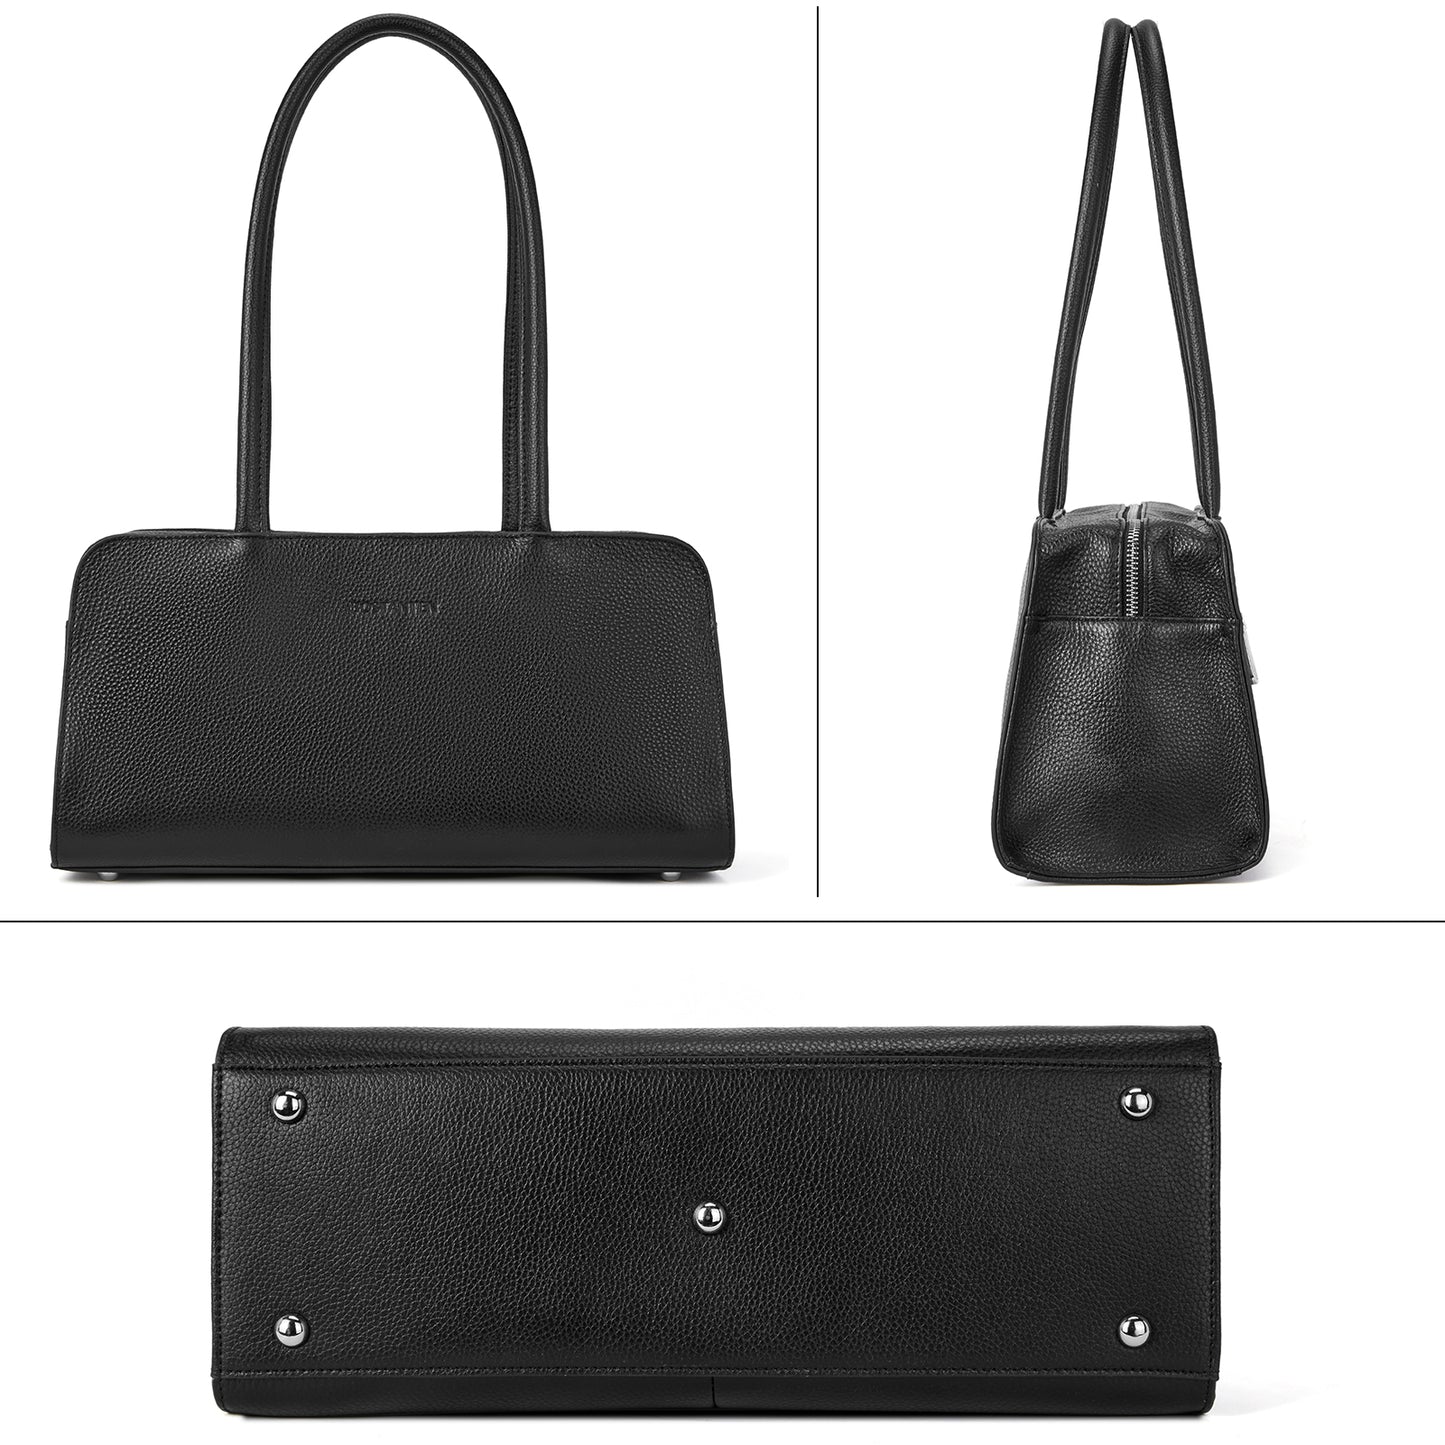 BOSTANTEN Women Designer Handbags Genuine Soft Leather Top Handle Purses and Handbags Satchel Shoulder Bag